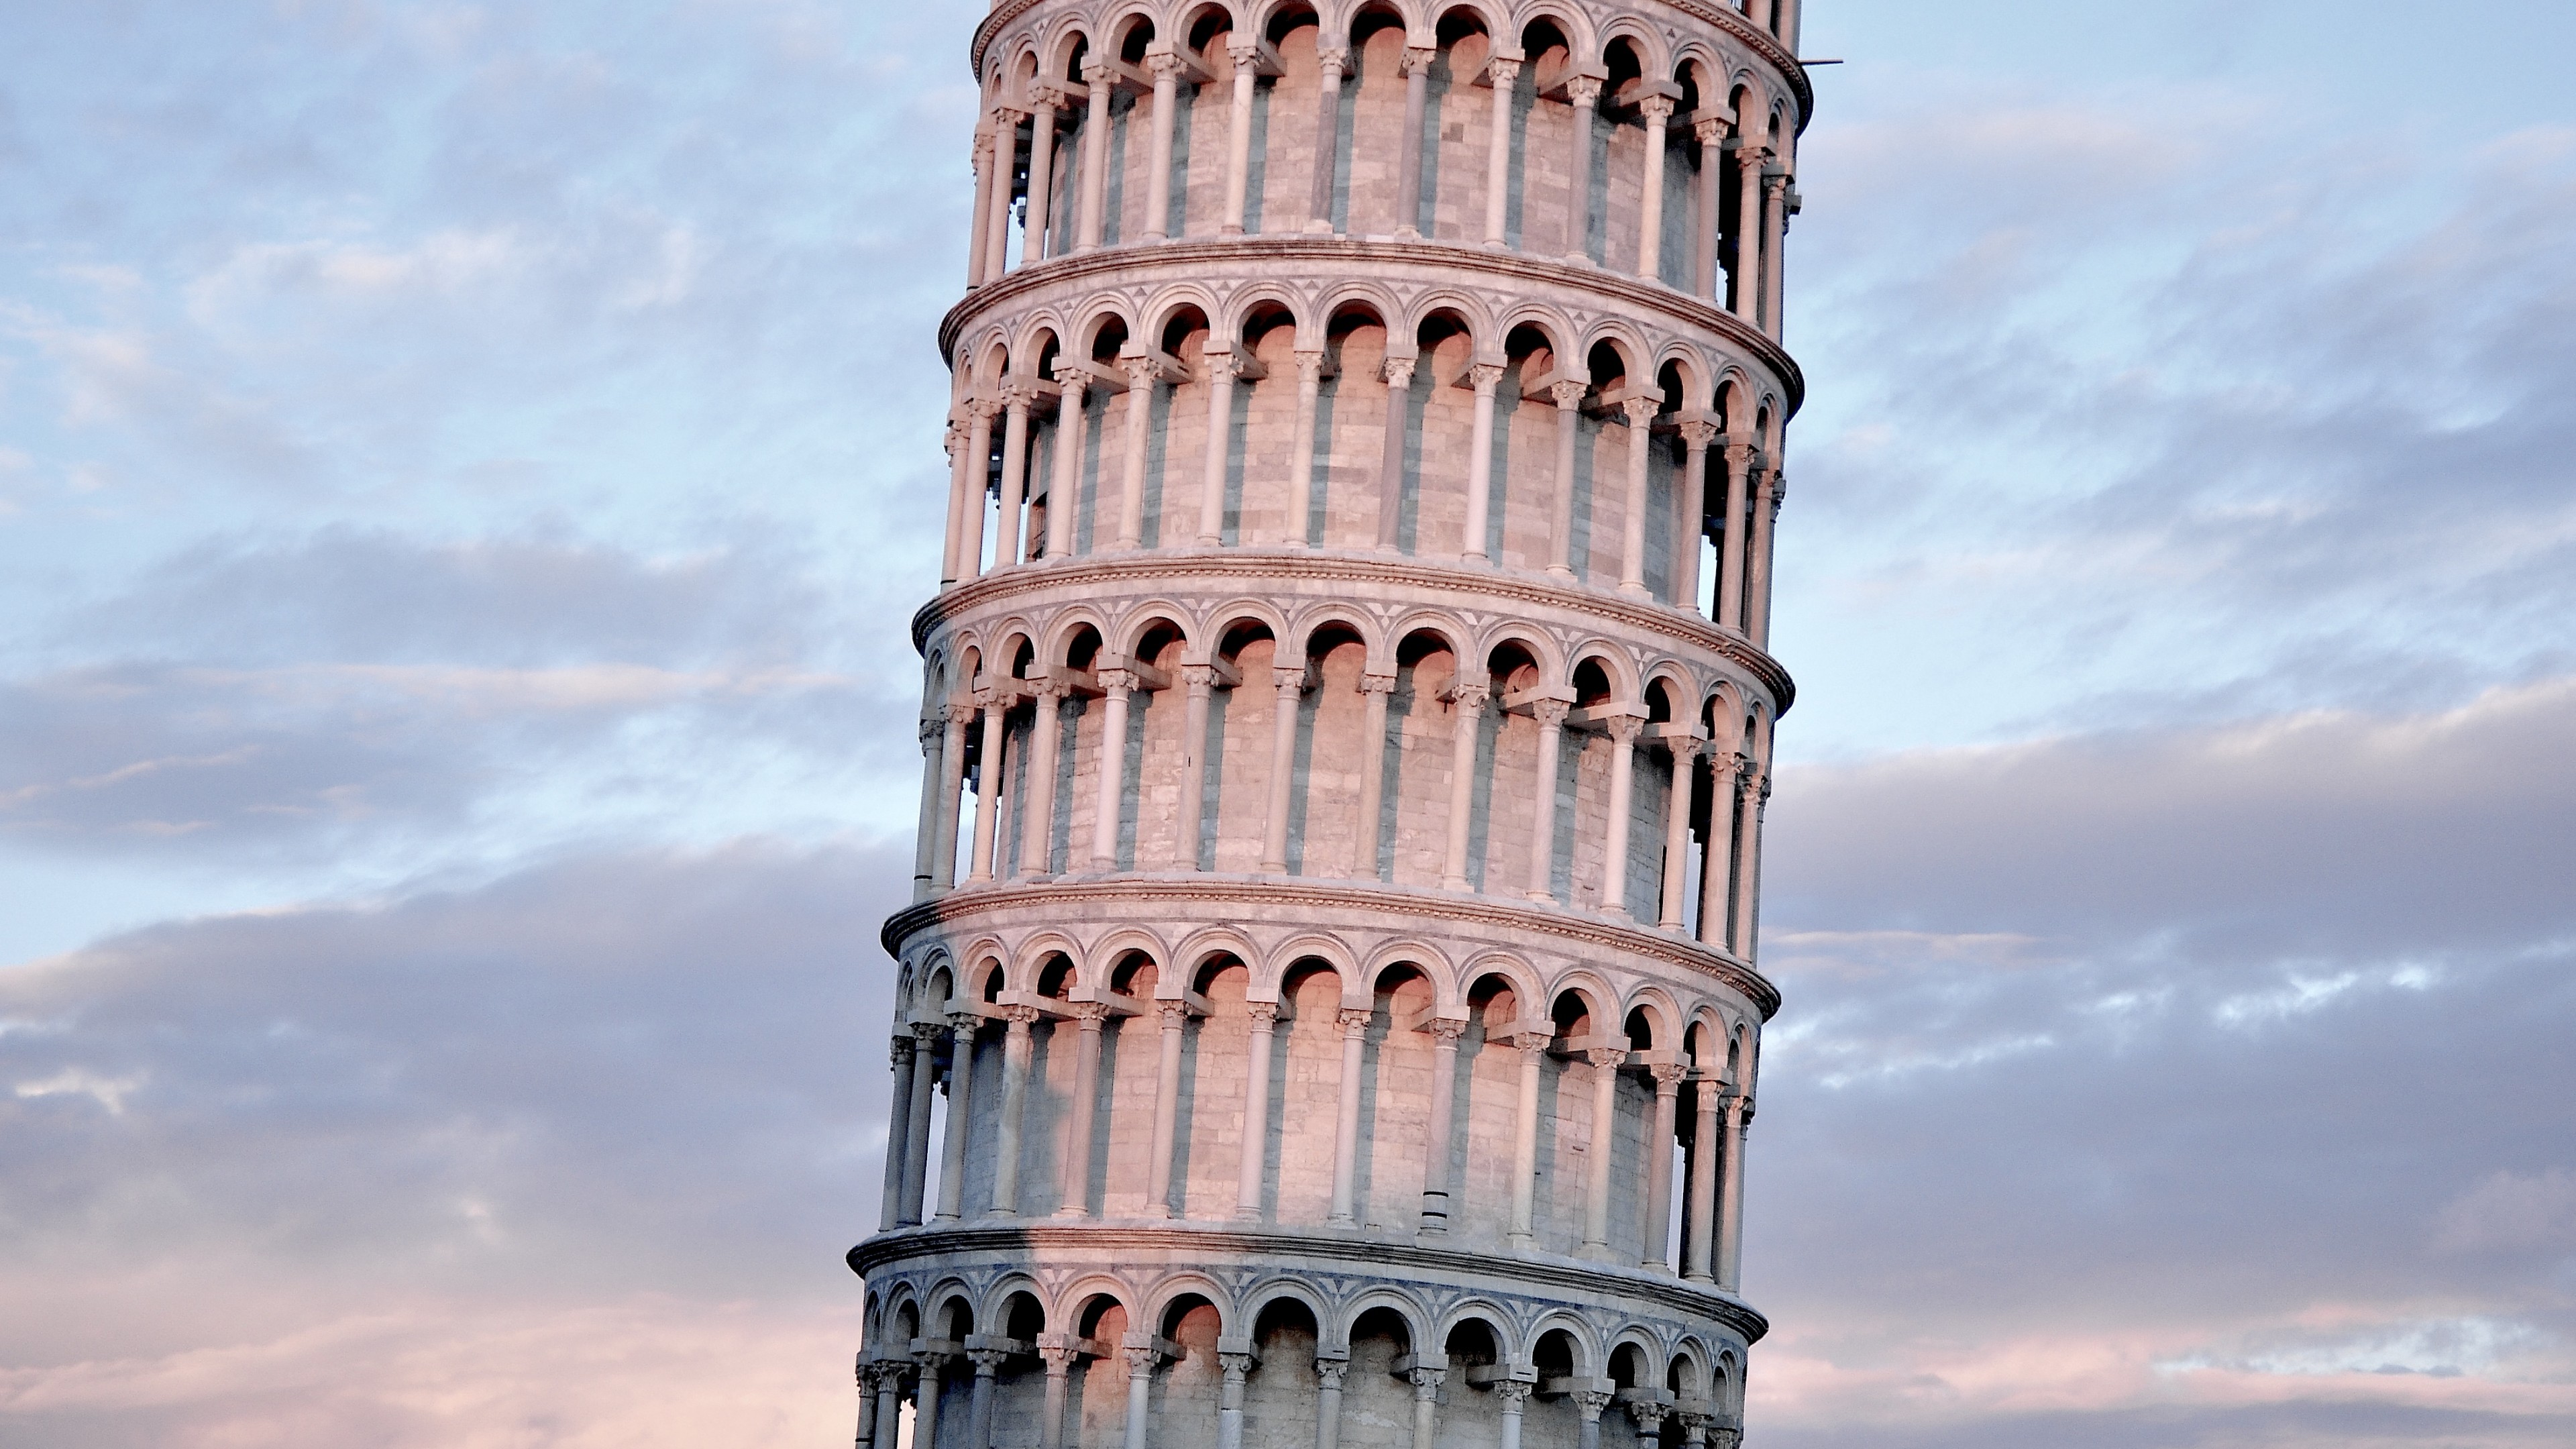 Fondos de pantalla Tower of Pisa